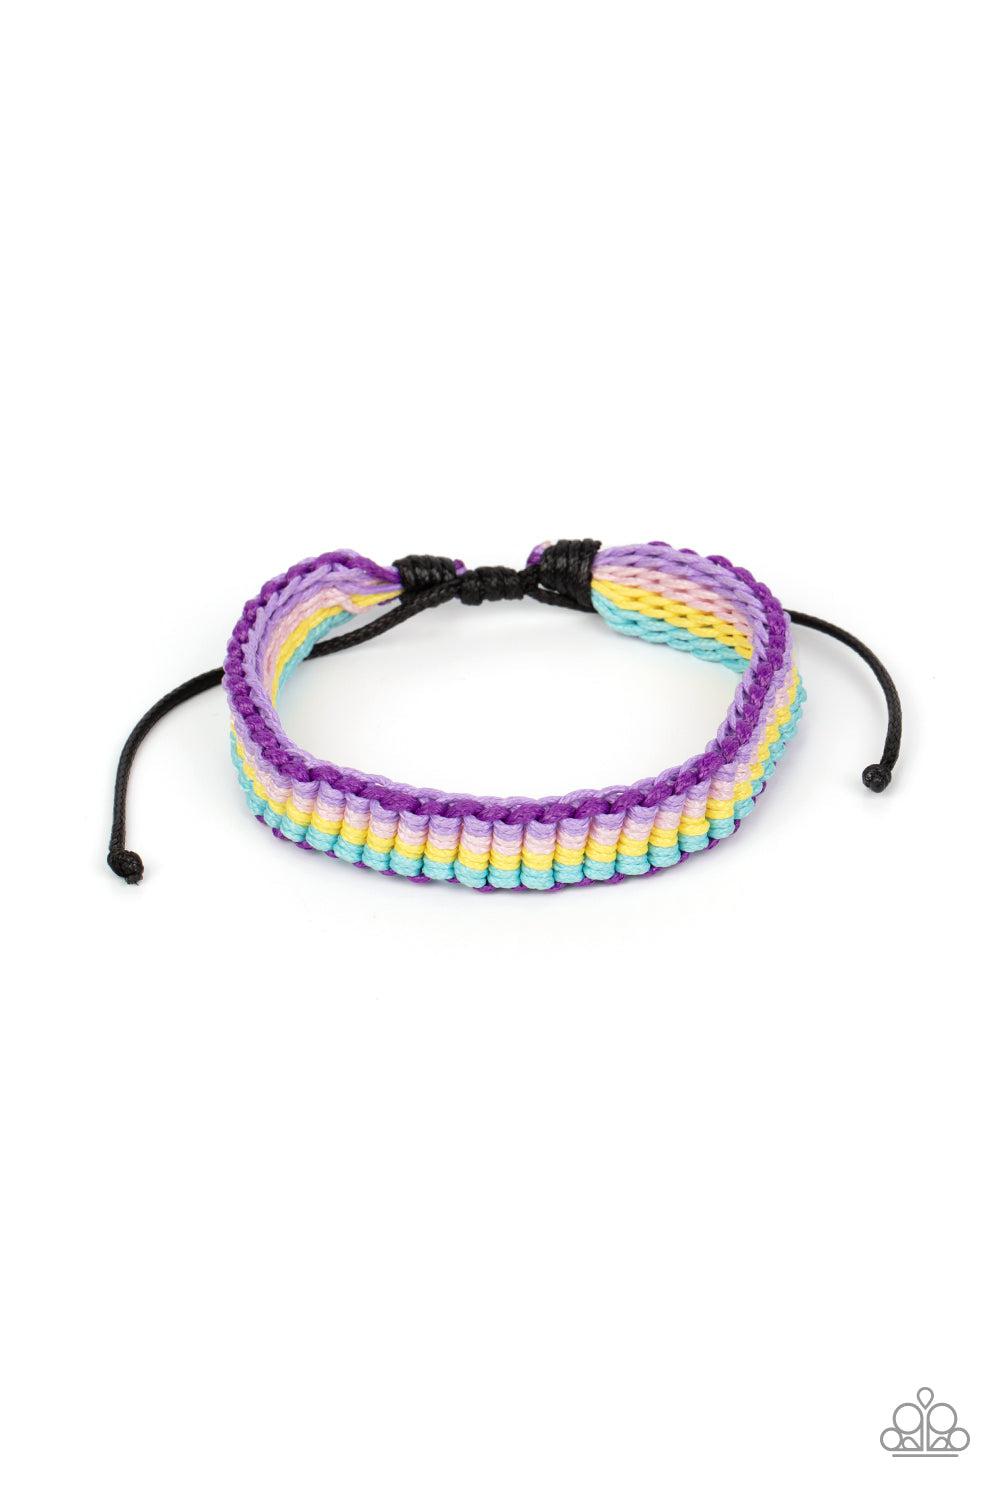 Campfire Craft Multi Purple & Blue Urban Slide Bracelet - Paparazzi Accessories- lightbox - CarasShop.com - $5 Jewelry by Cara Jewels